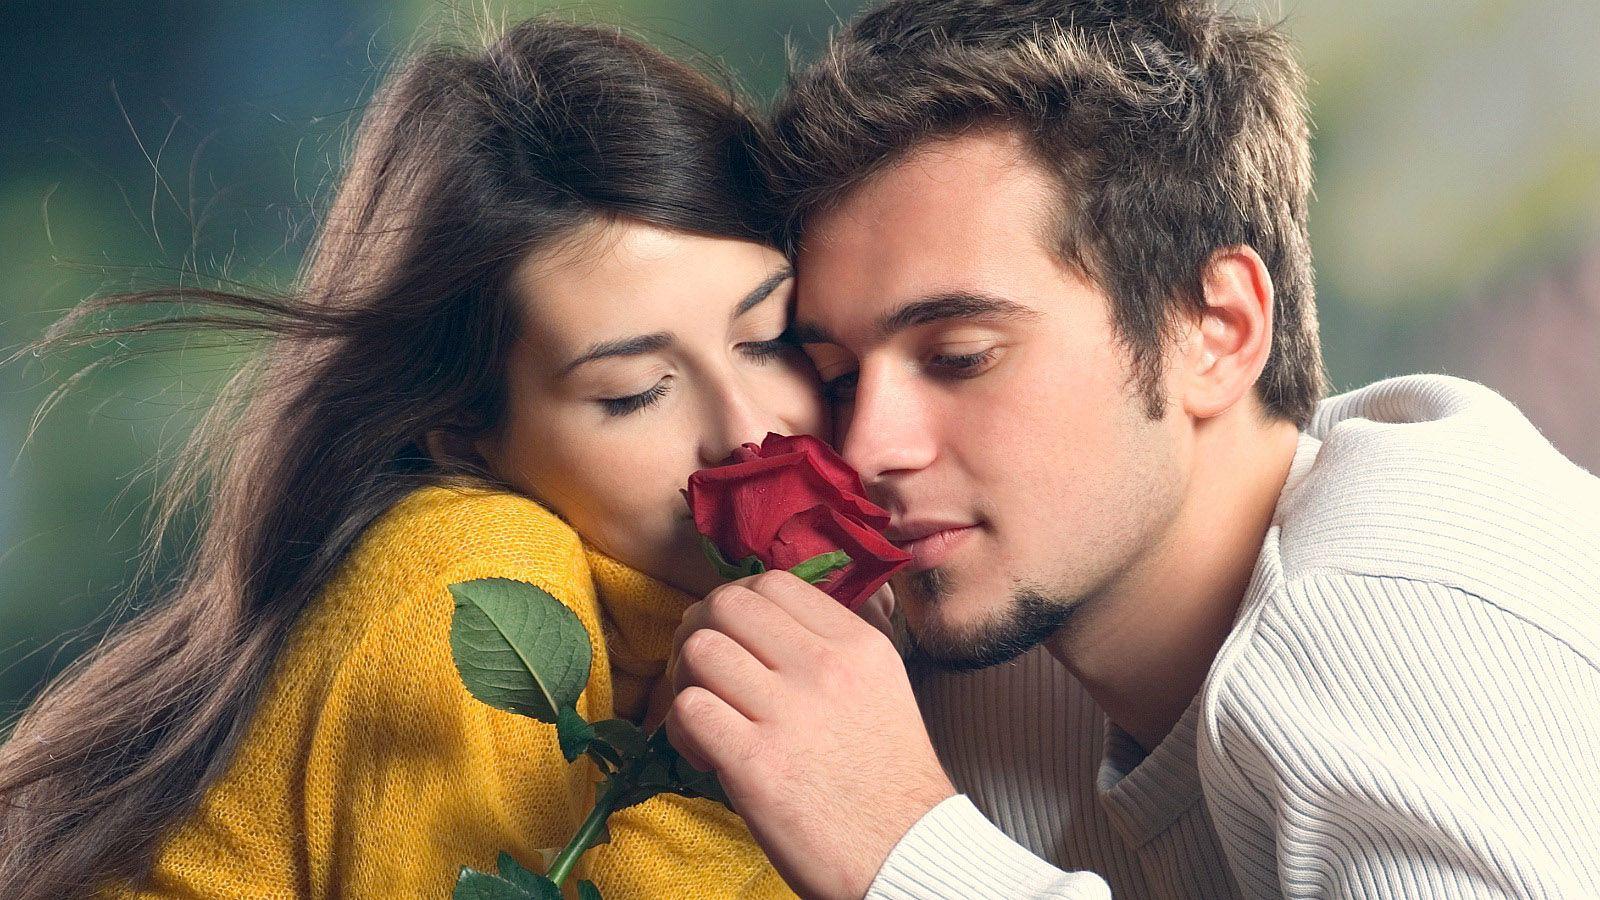 Romantic 1080p HD Wallpaper. best top desktop romantic wallpaper